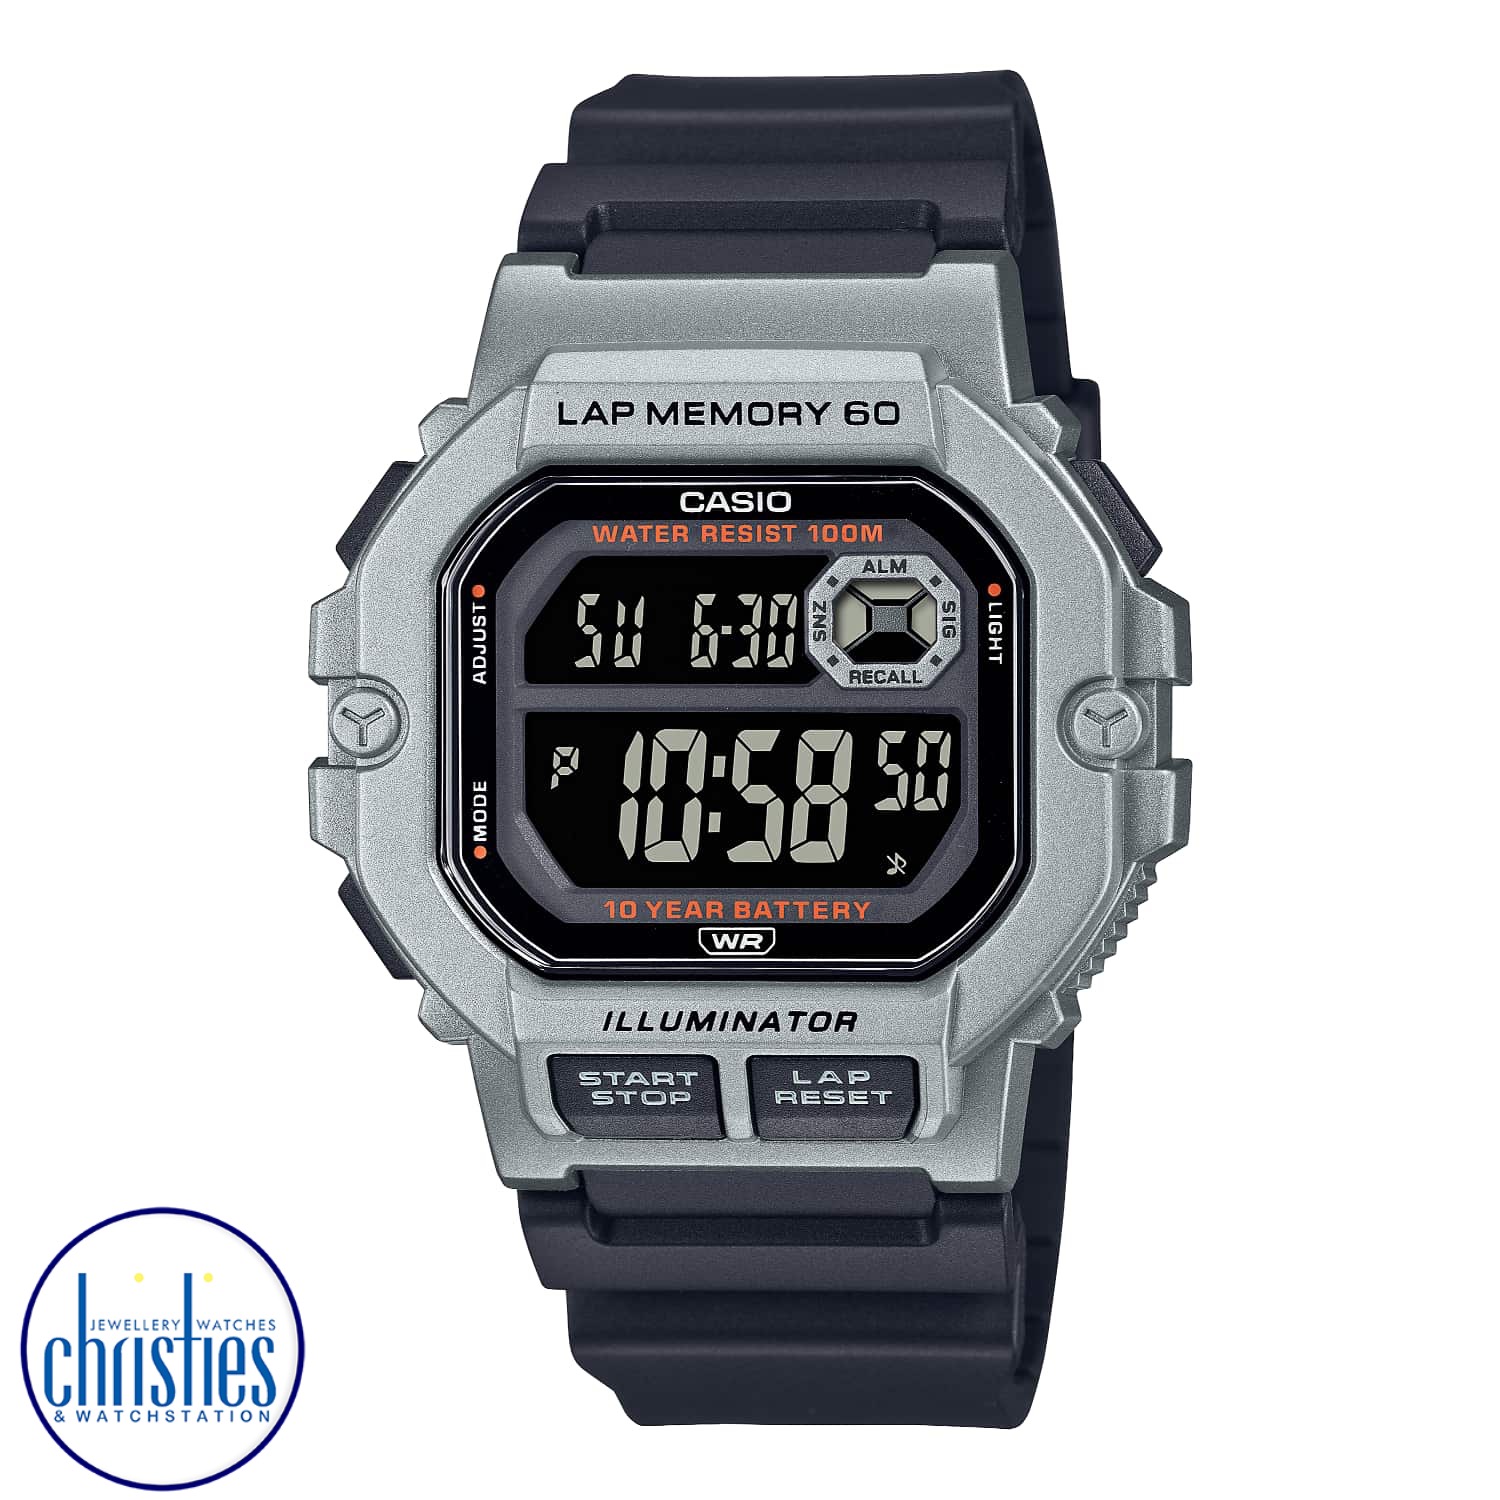 WS1400H-1B Casio 60 Lap Memory Sports Watch cheap casio watches nz